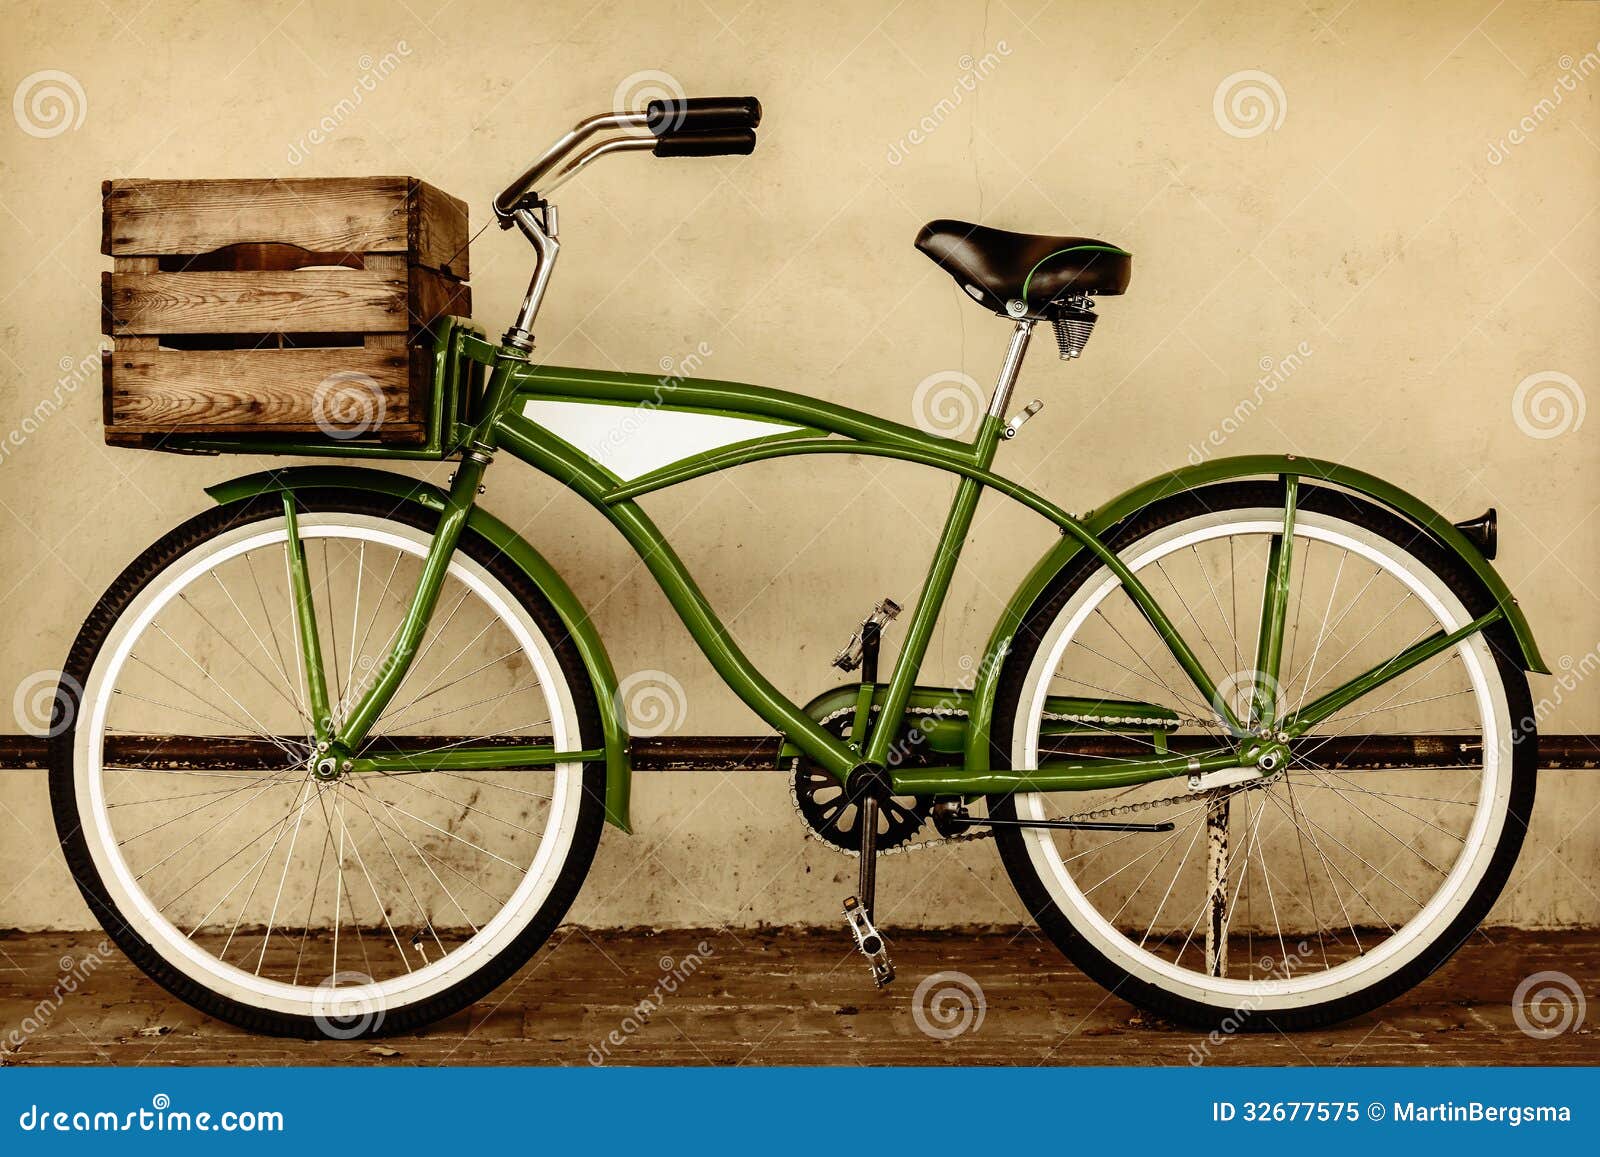 vintage push bikes